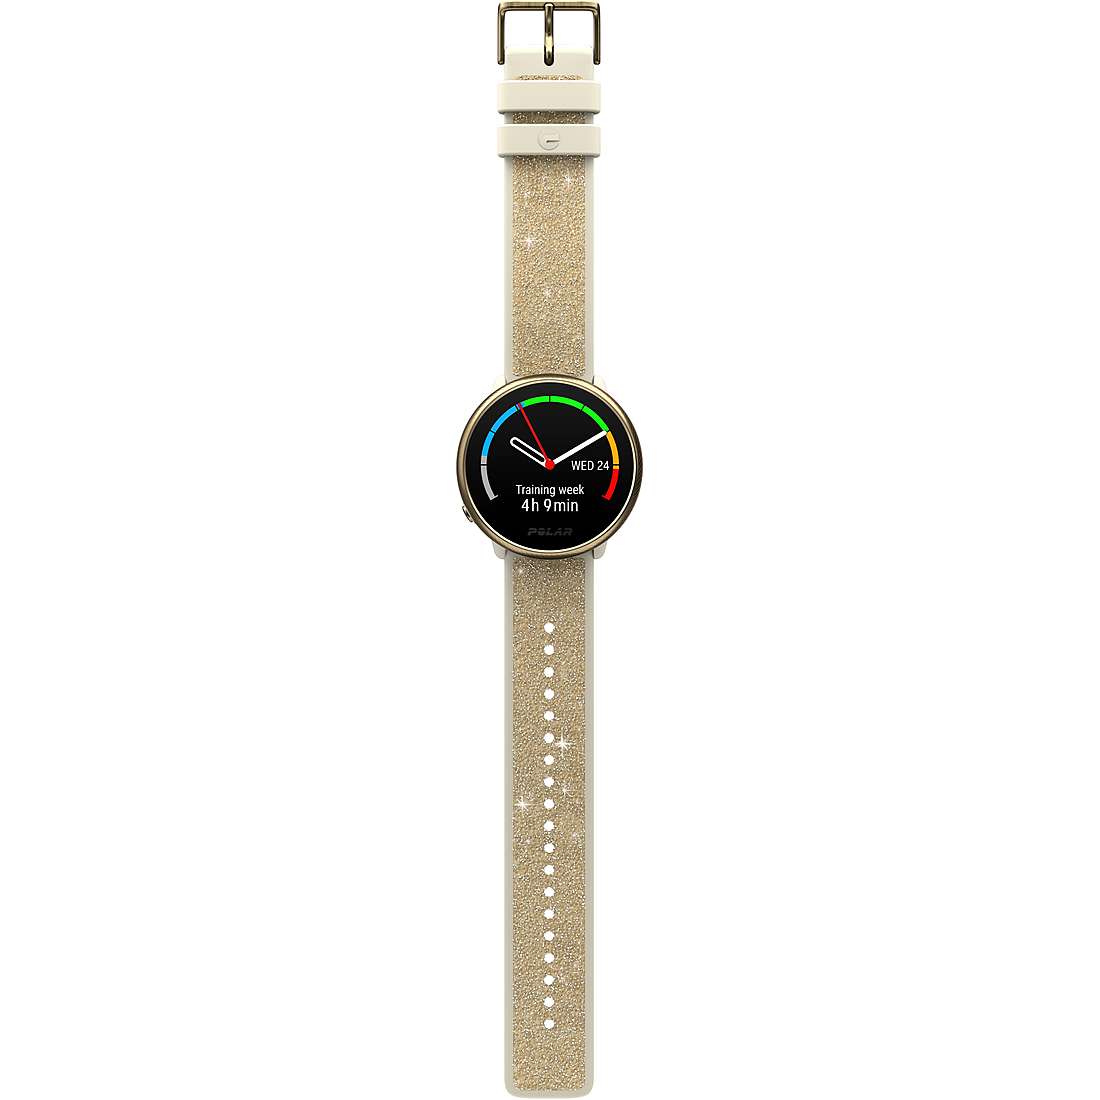 orologio Smartwatch donna Polar Ignite 2 - 900104363 900104363